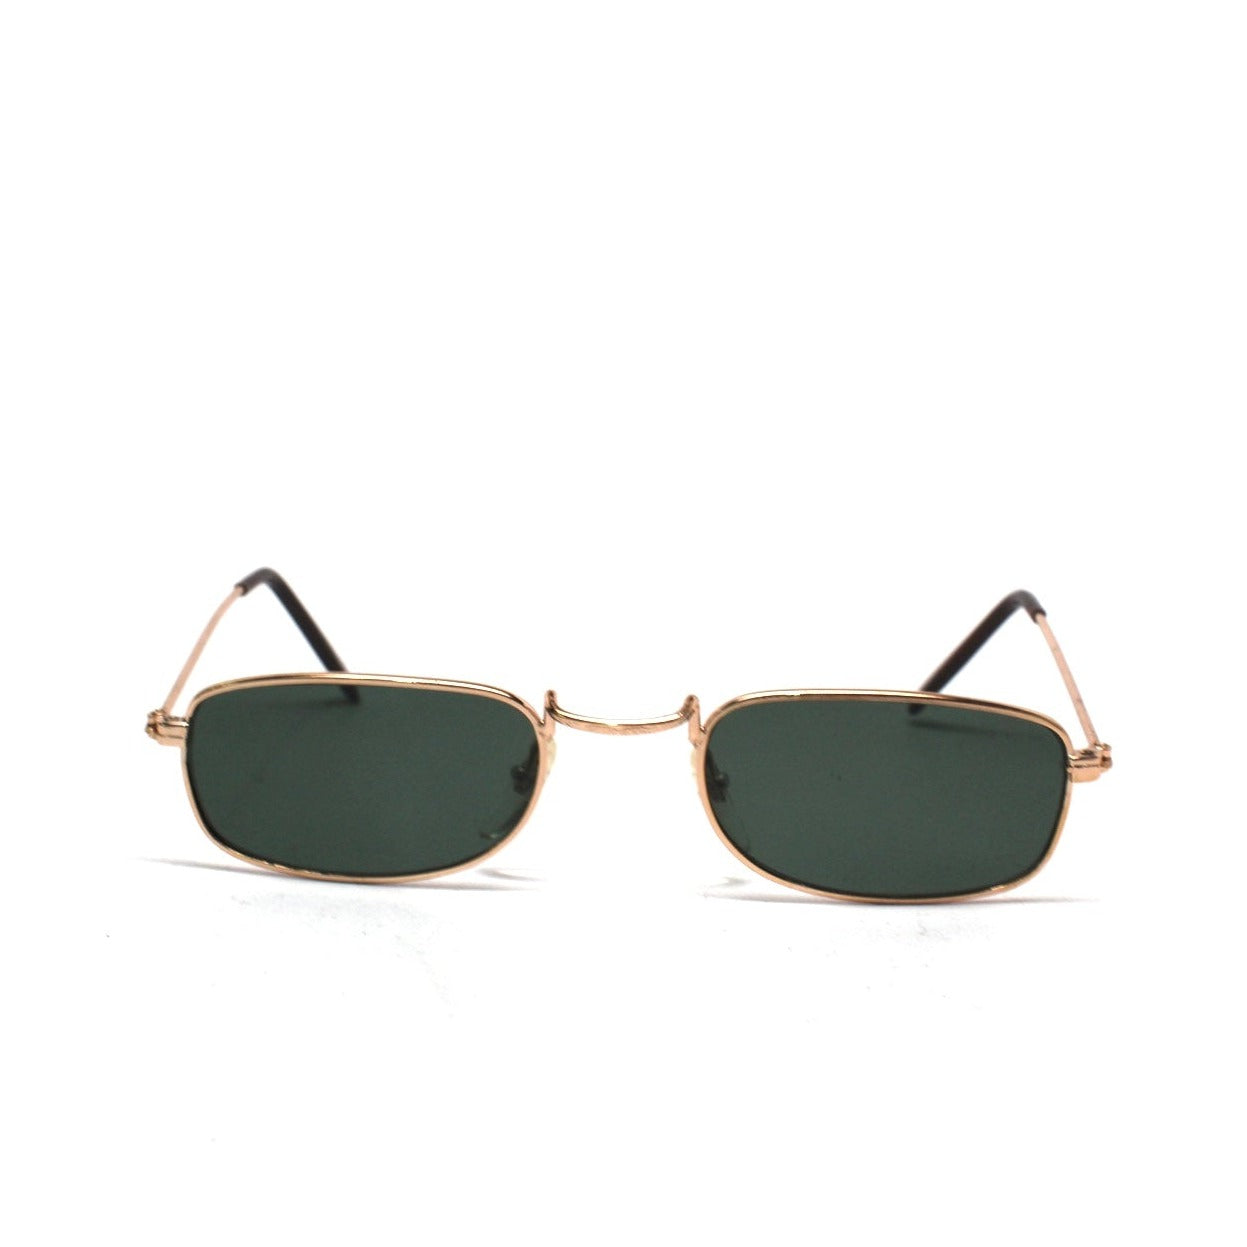 Vintage Small Size 1997 Rectangular Narrow Frame Sunglasses - Gold